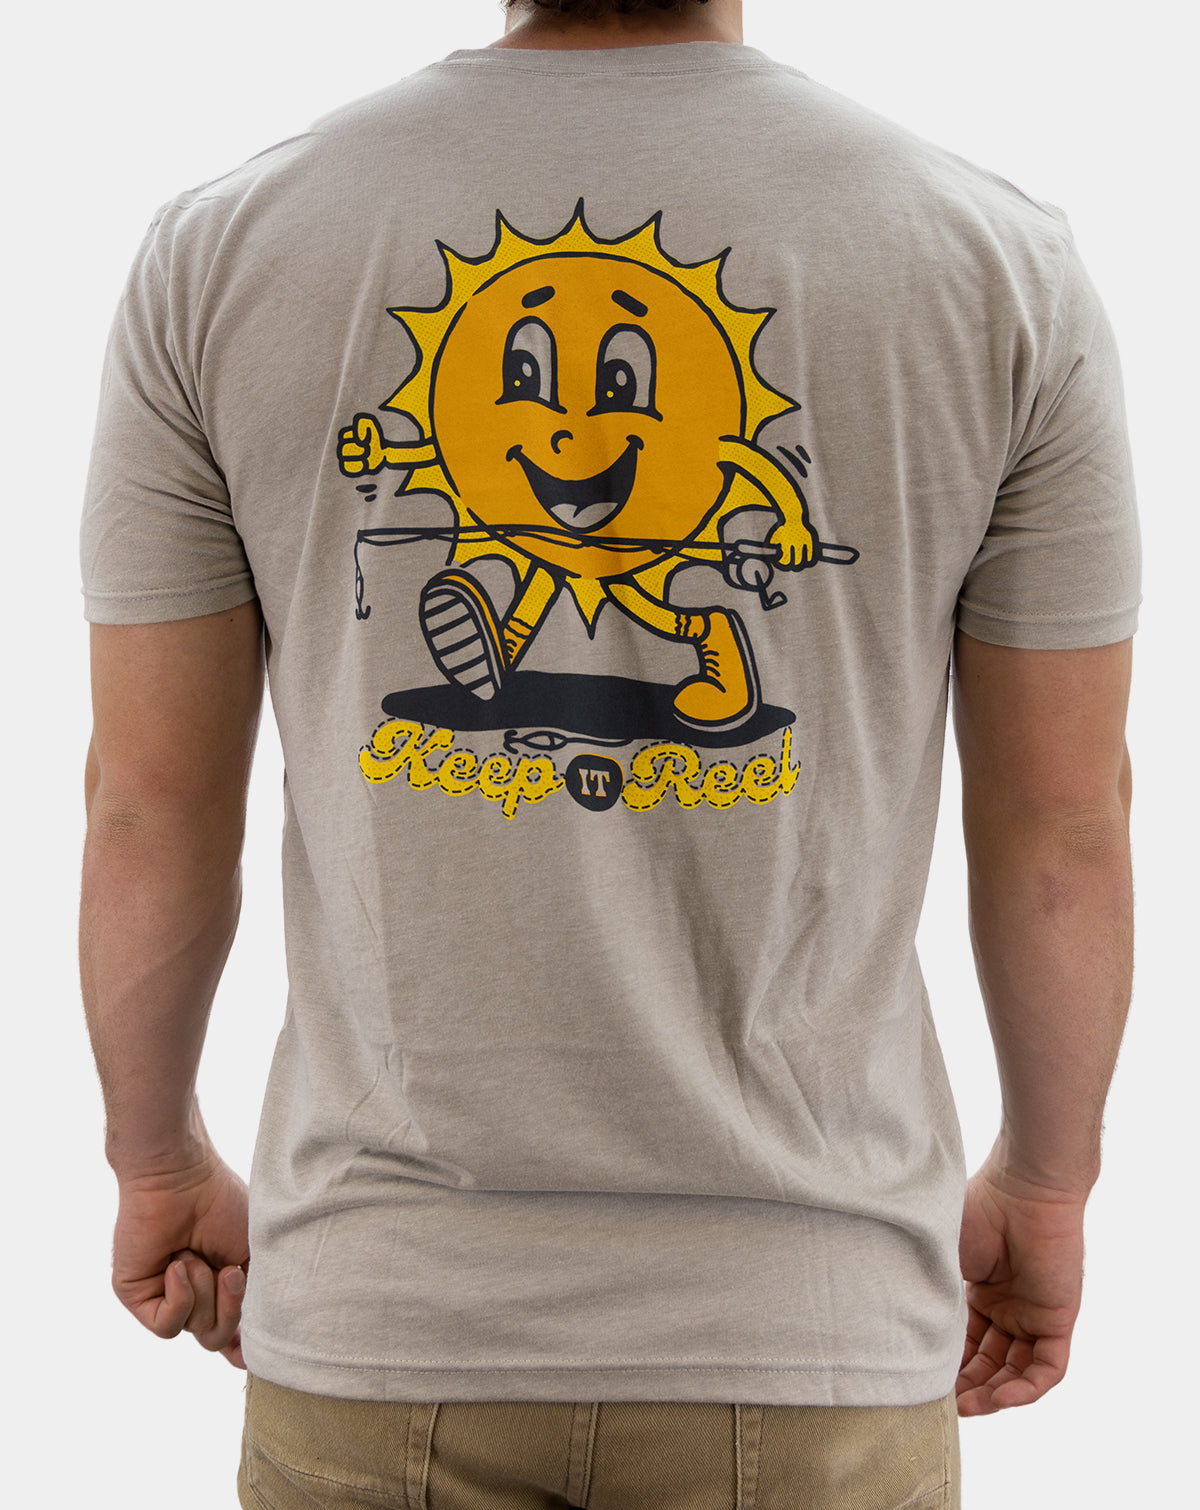 keep it simple men's fishing t-shirt - fun sun with fishing rod